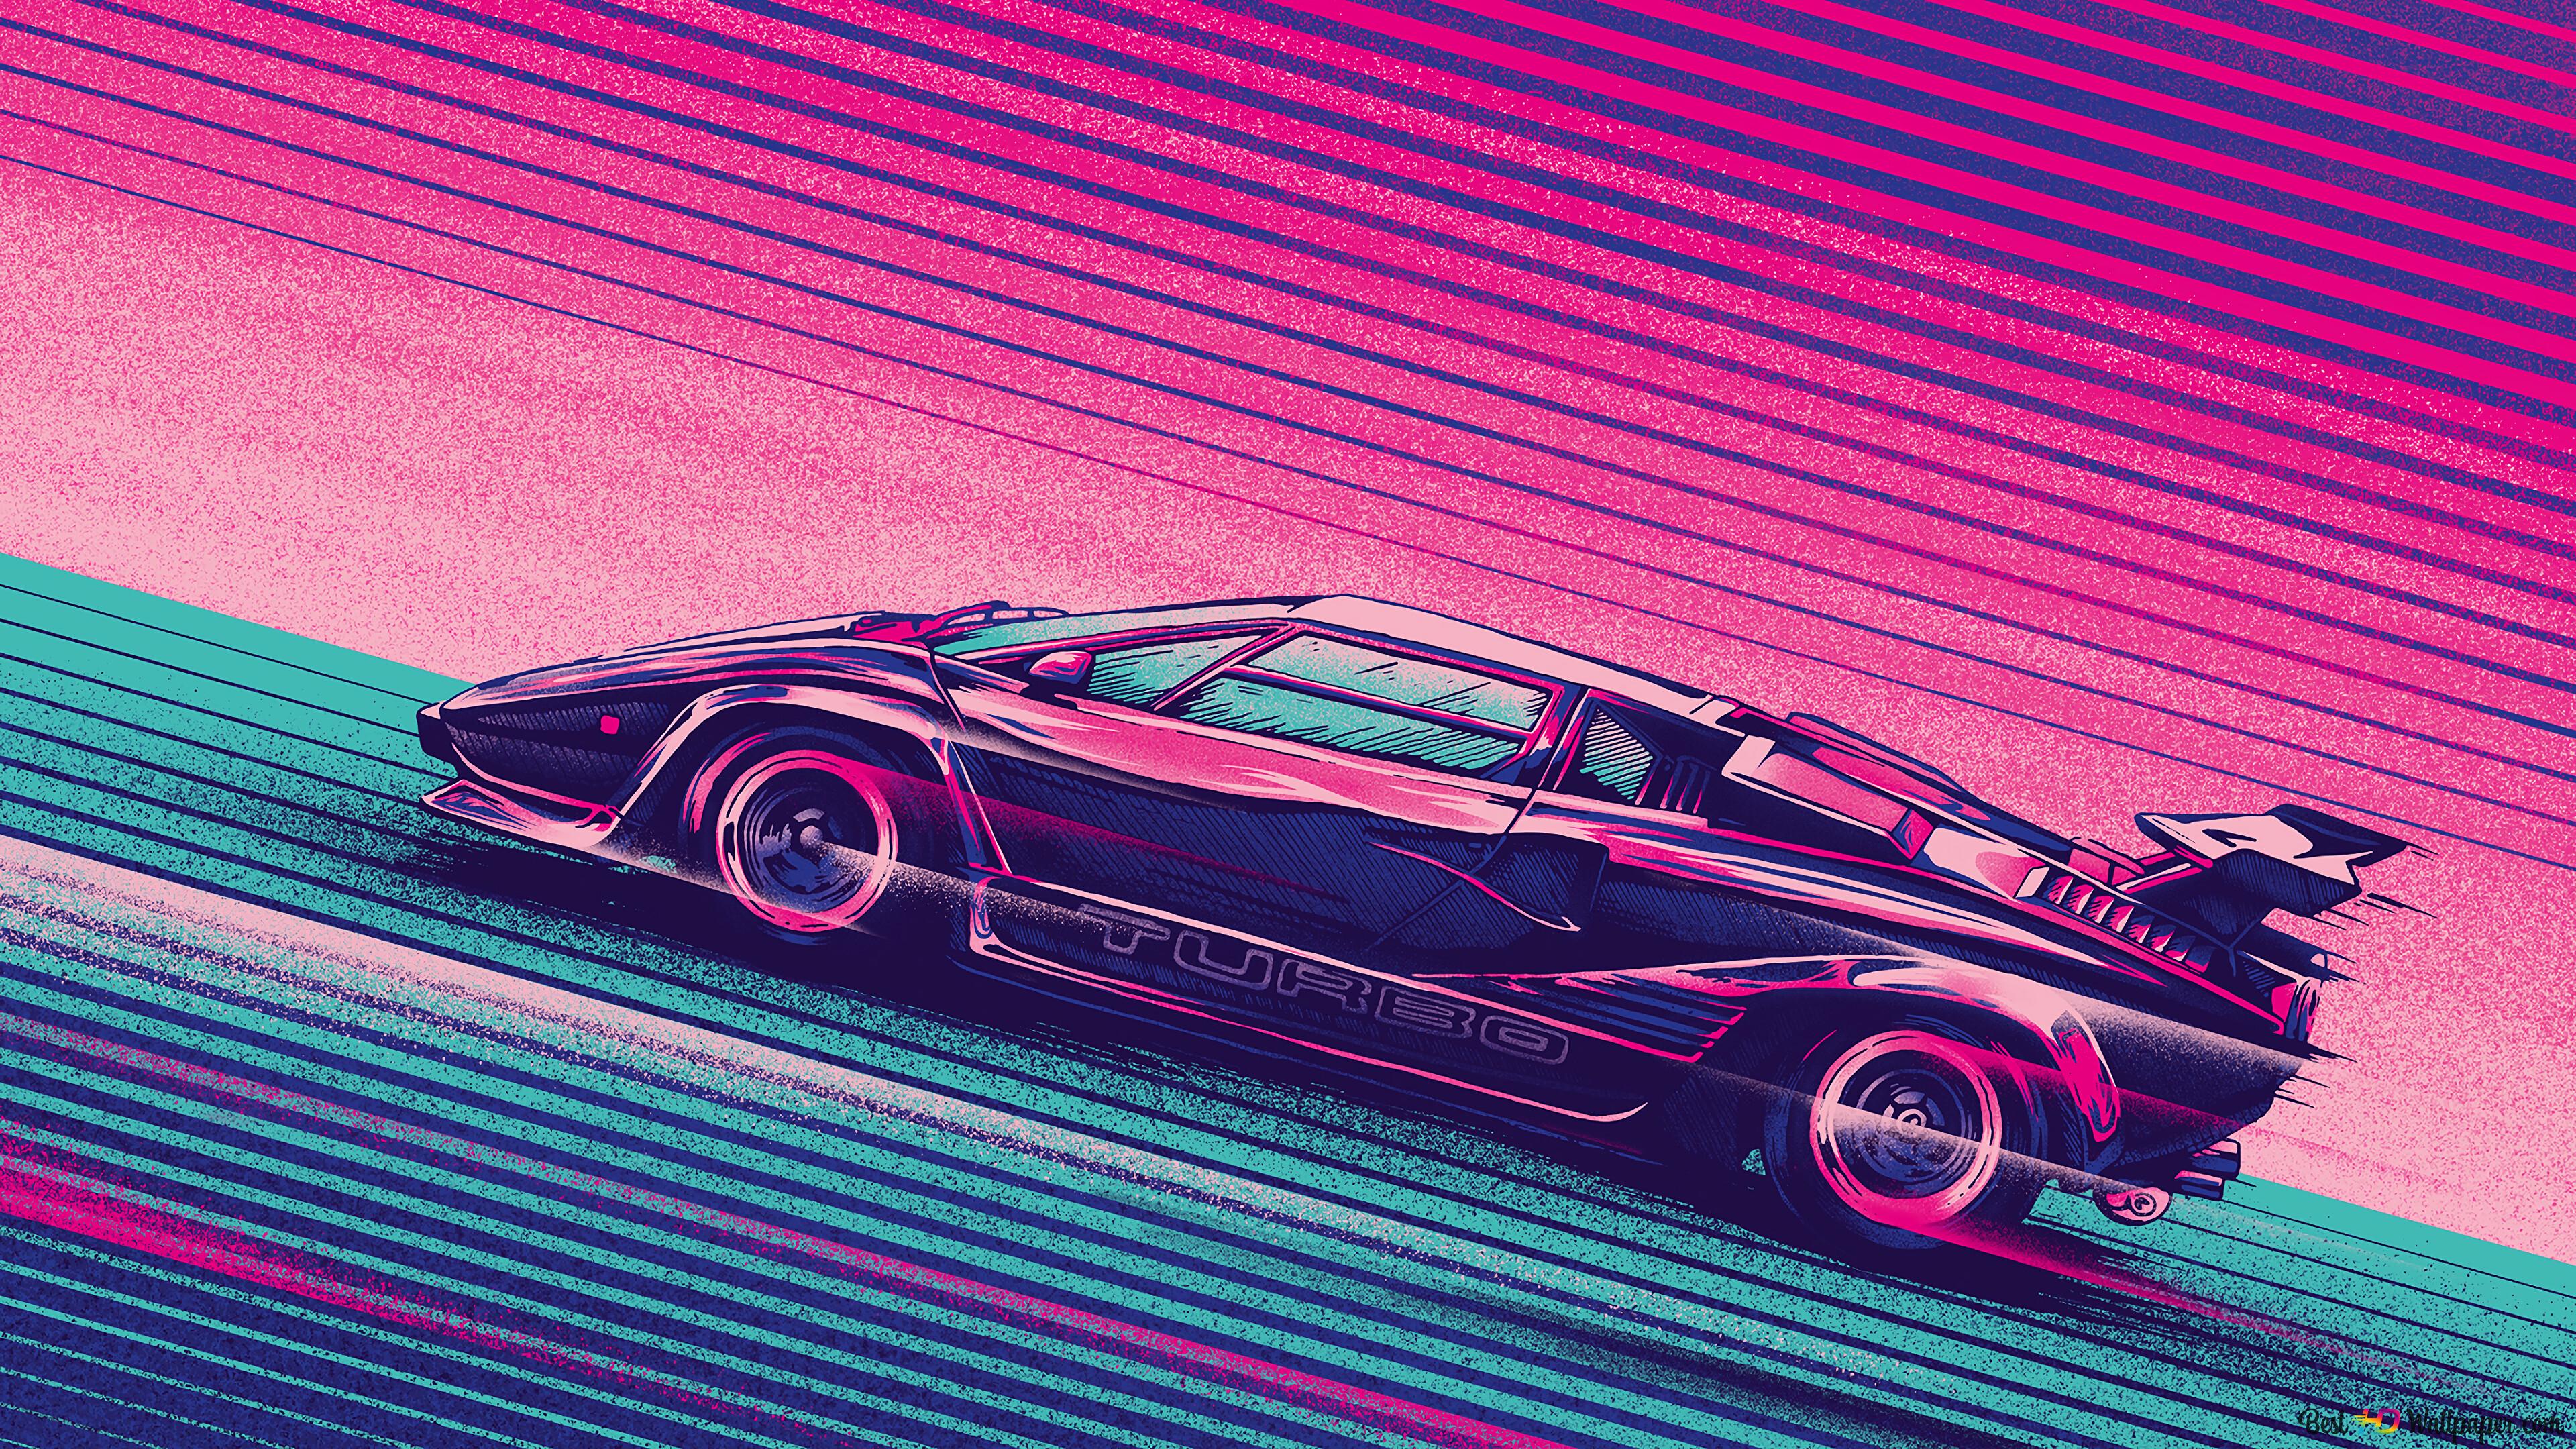 Scifi Car Neon 4K wallpaper download